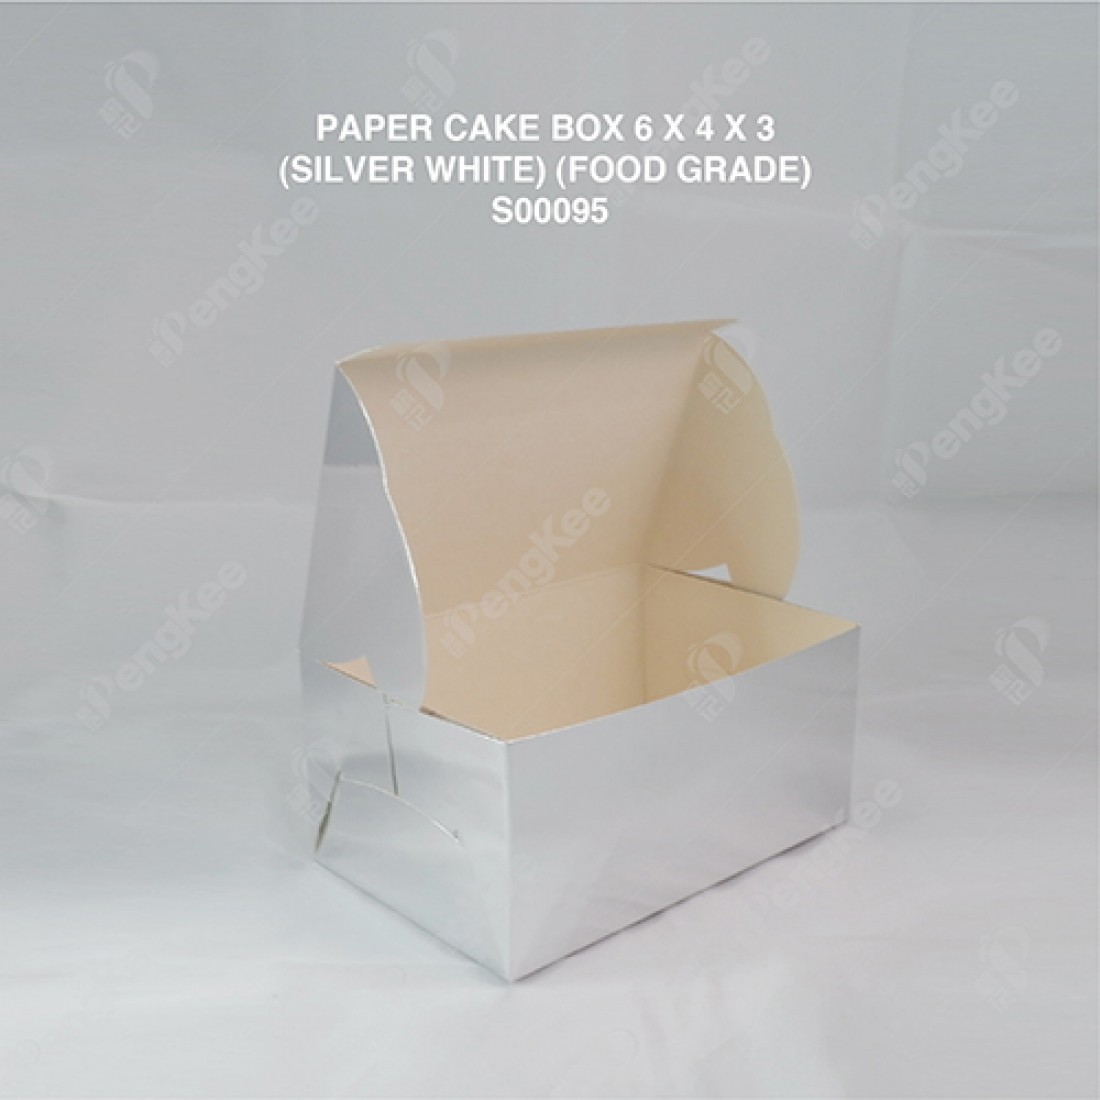 PAPER CAKE BOX 6 X 4 X 3 (SILVER WHITE) (food grade) (100'SPKT) (300'SBDL)